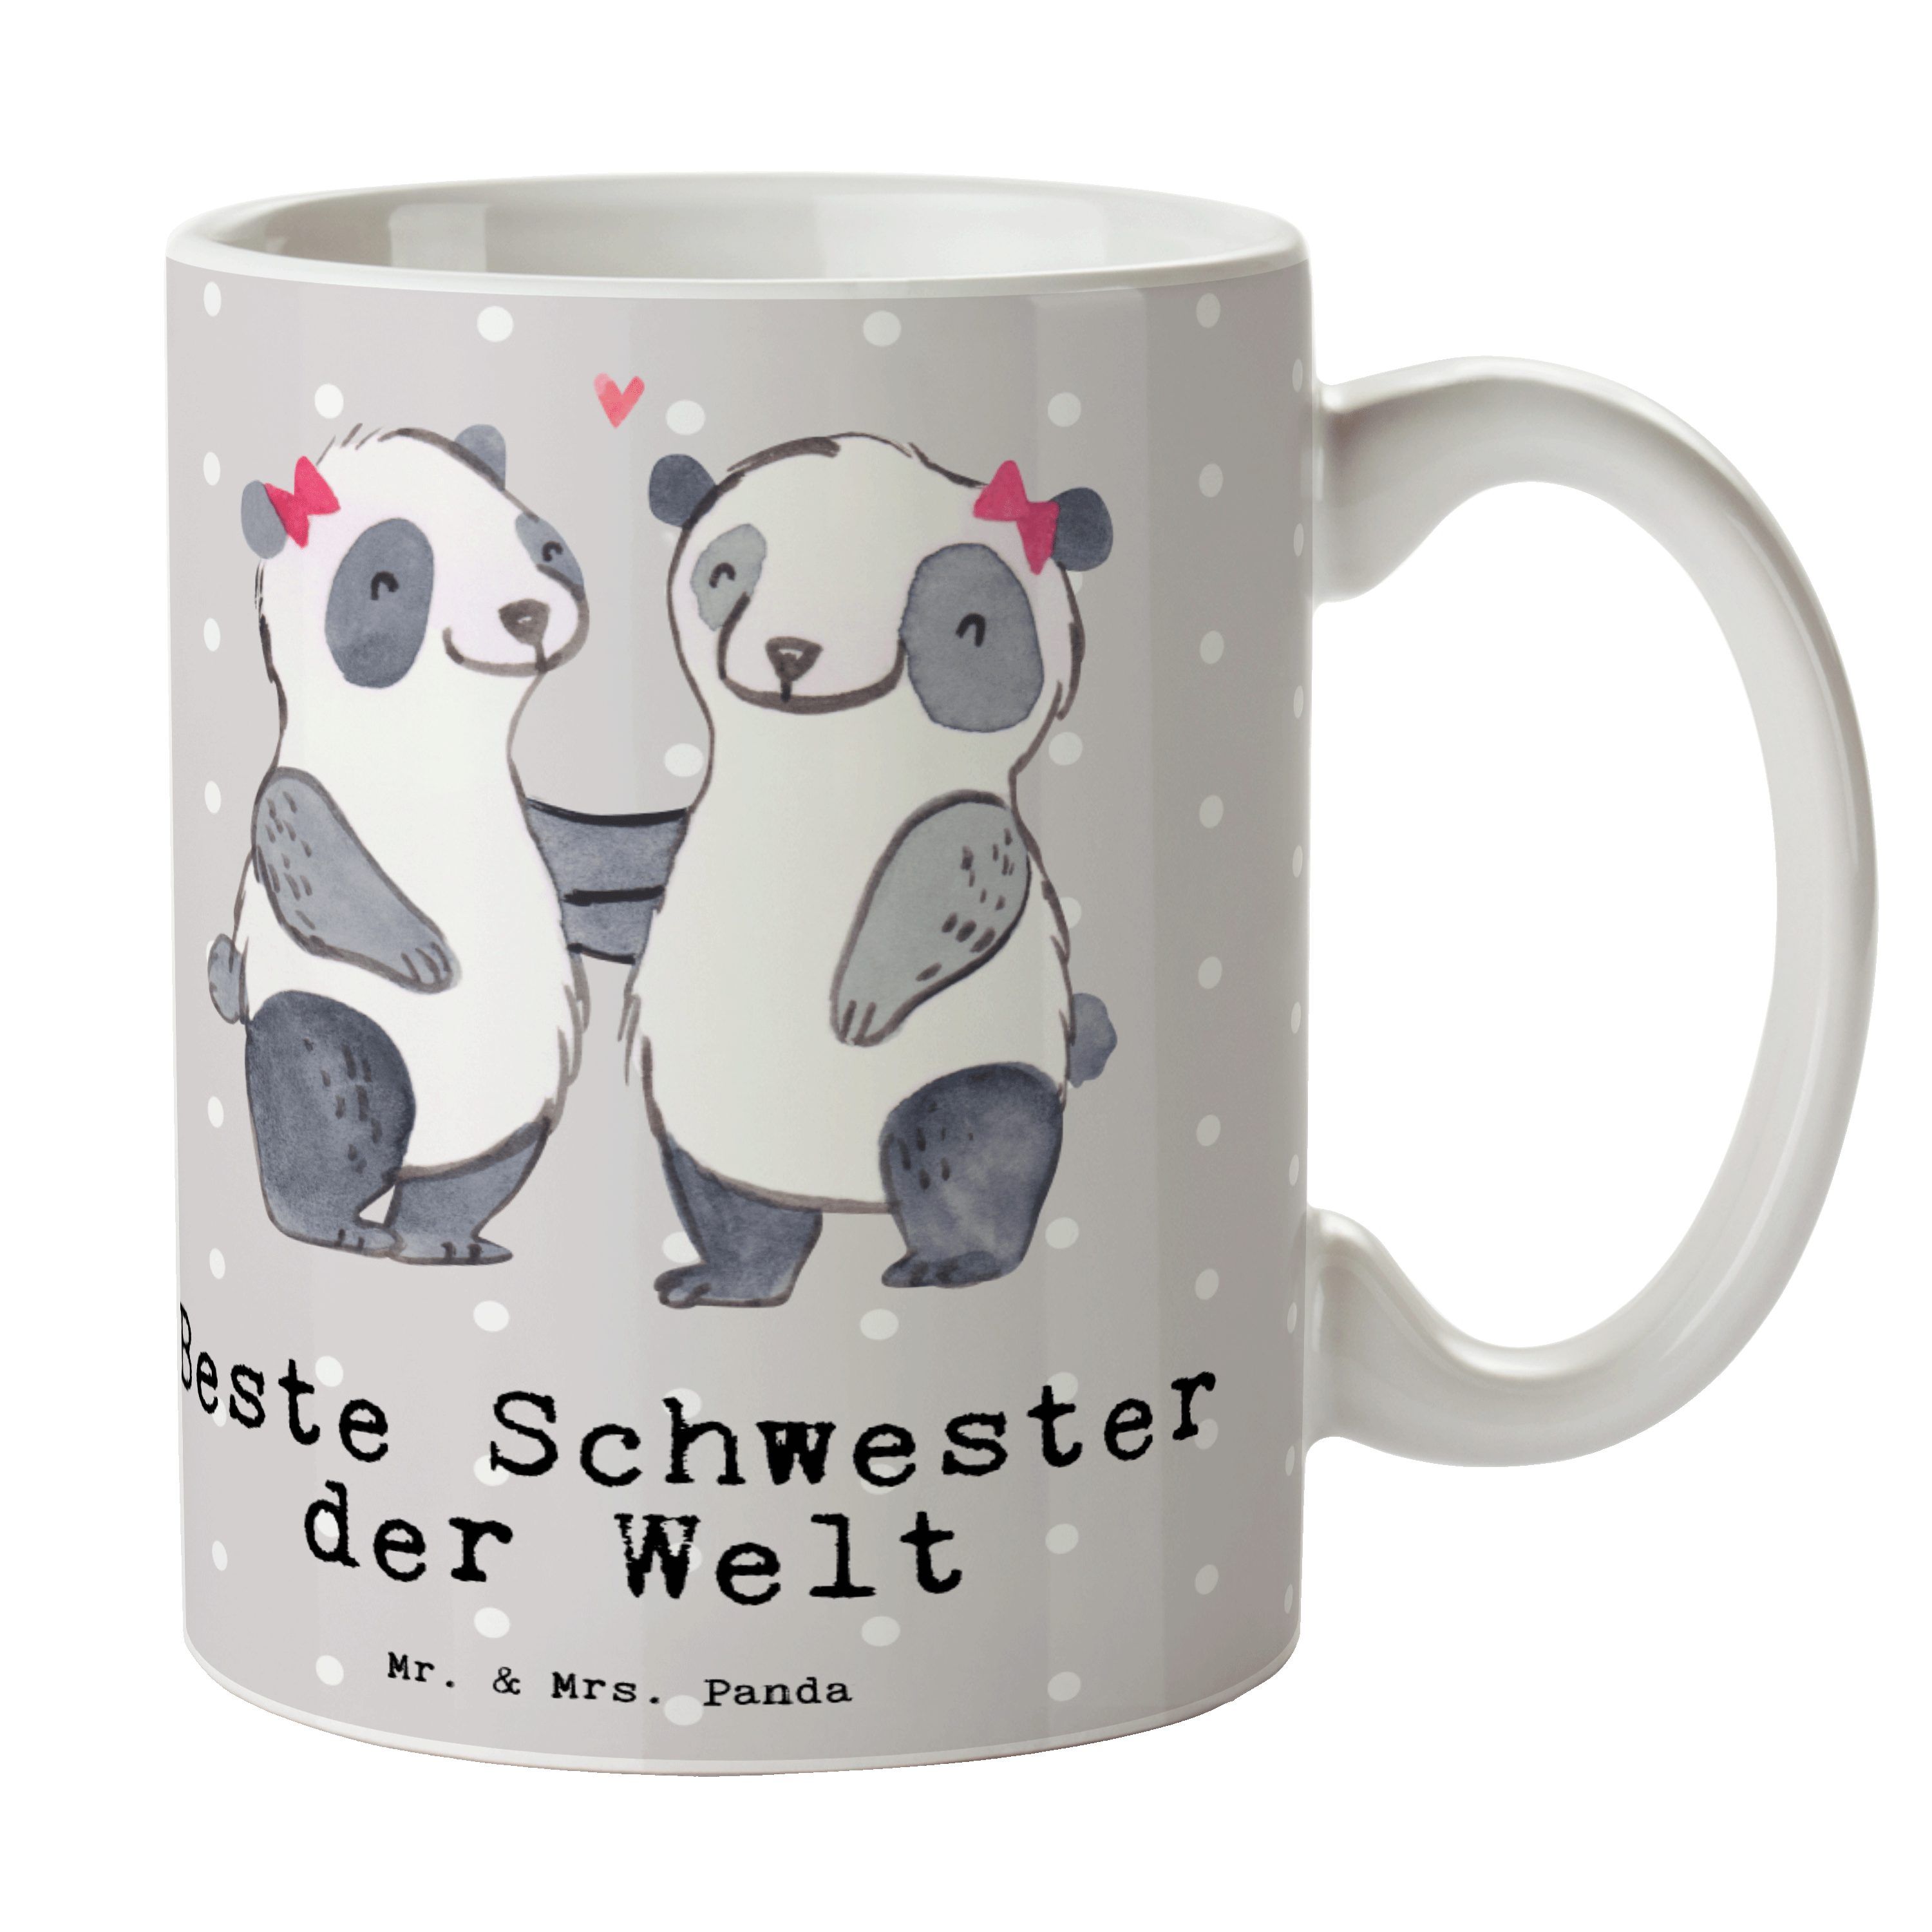 Mr. & Mrs. Panda Tasse Panda Beste Schwester der Welt - Grau Pastell - Geschenk, Geburtstags, Keramik